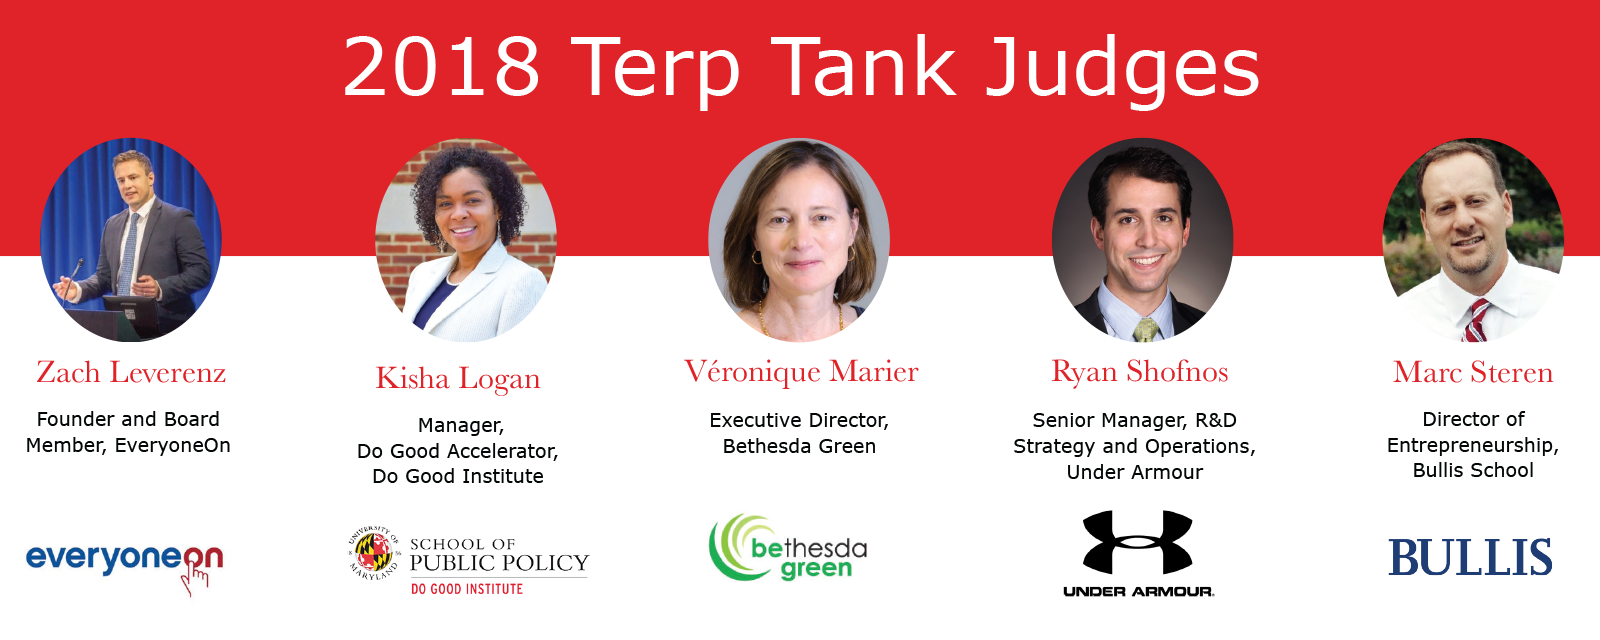 2018 Terp Trank Judges graphic